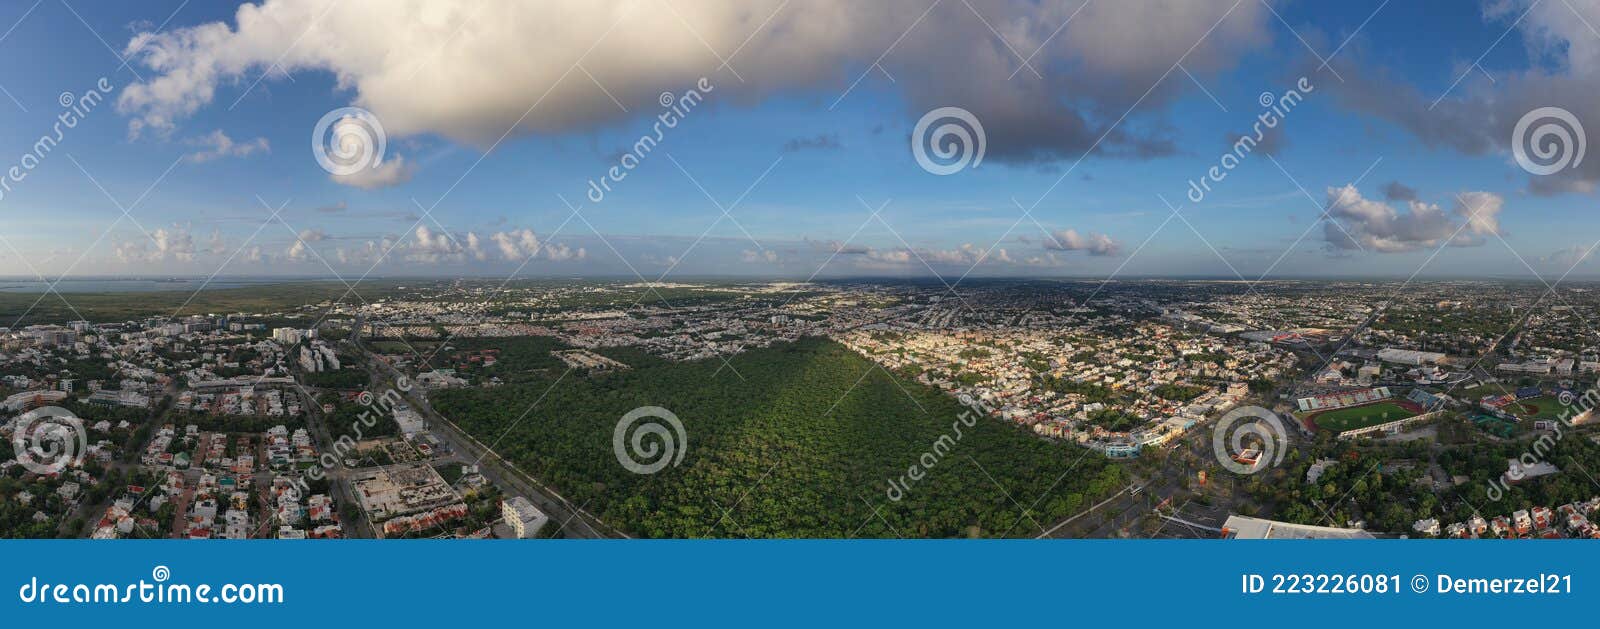 urbano kabah park - cancun, mexico